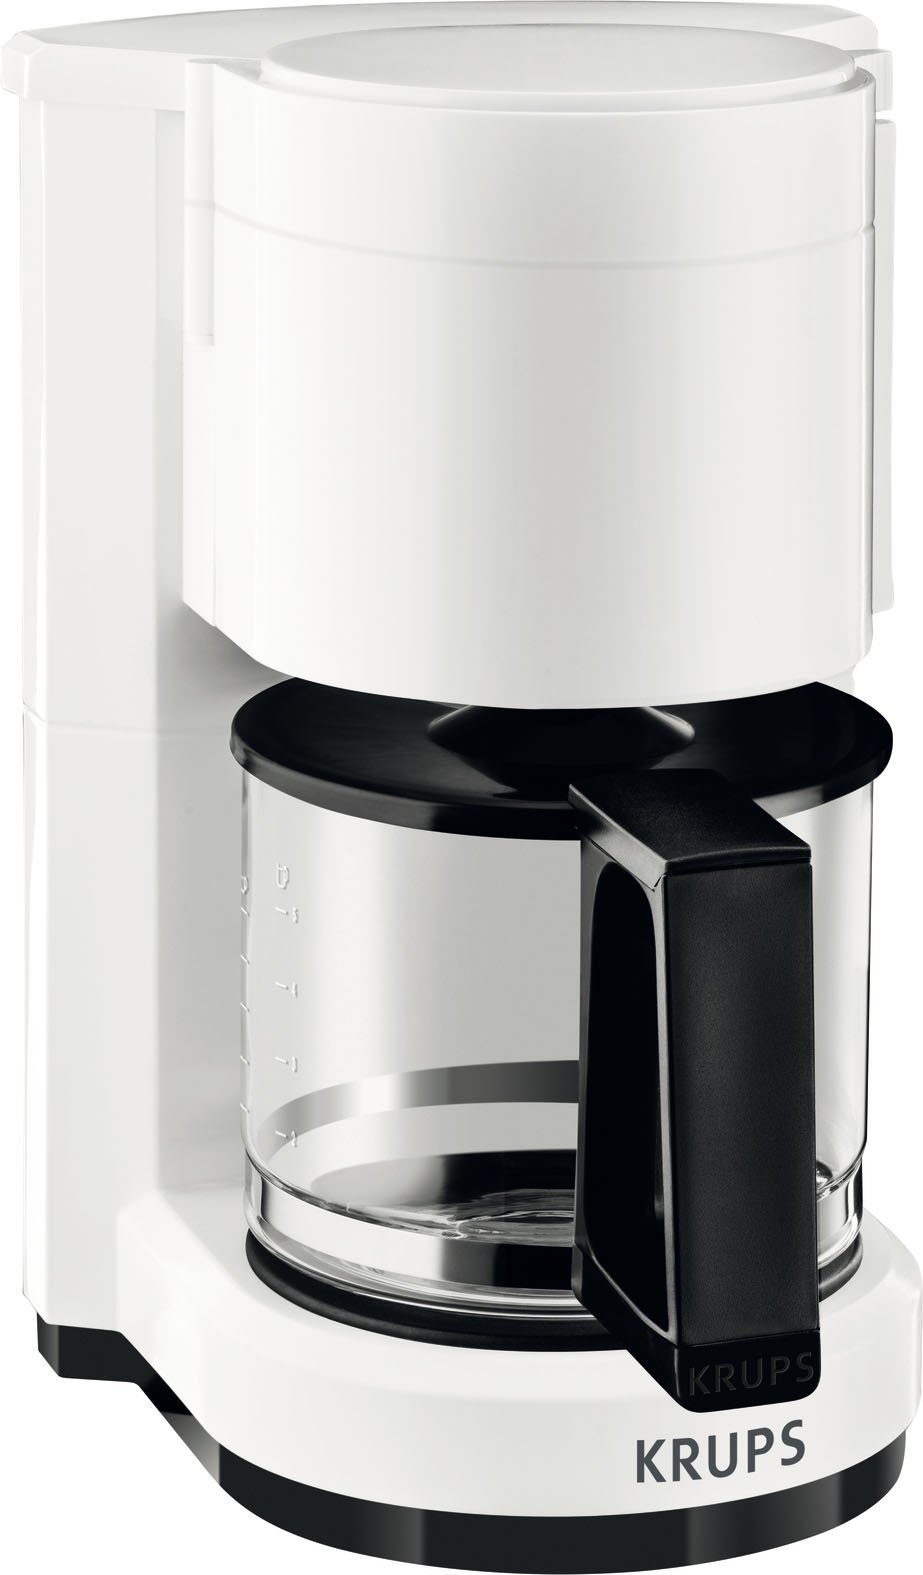 für Filterhalter, herausnehmbarer Kaffeekanne, 0,6l Tassen 5-7 Kaffee, Krups Filterkaffeemaschine F18301 Warmhaltefunktion Aromacafe,